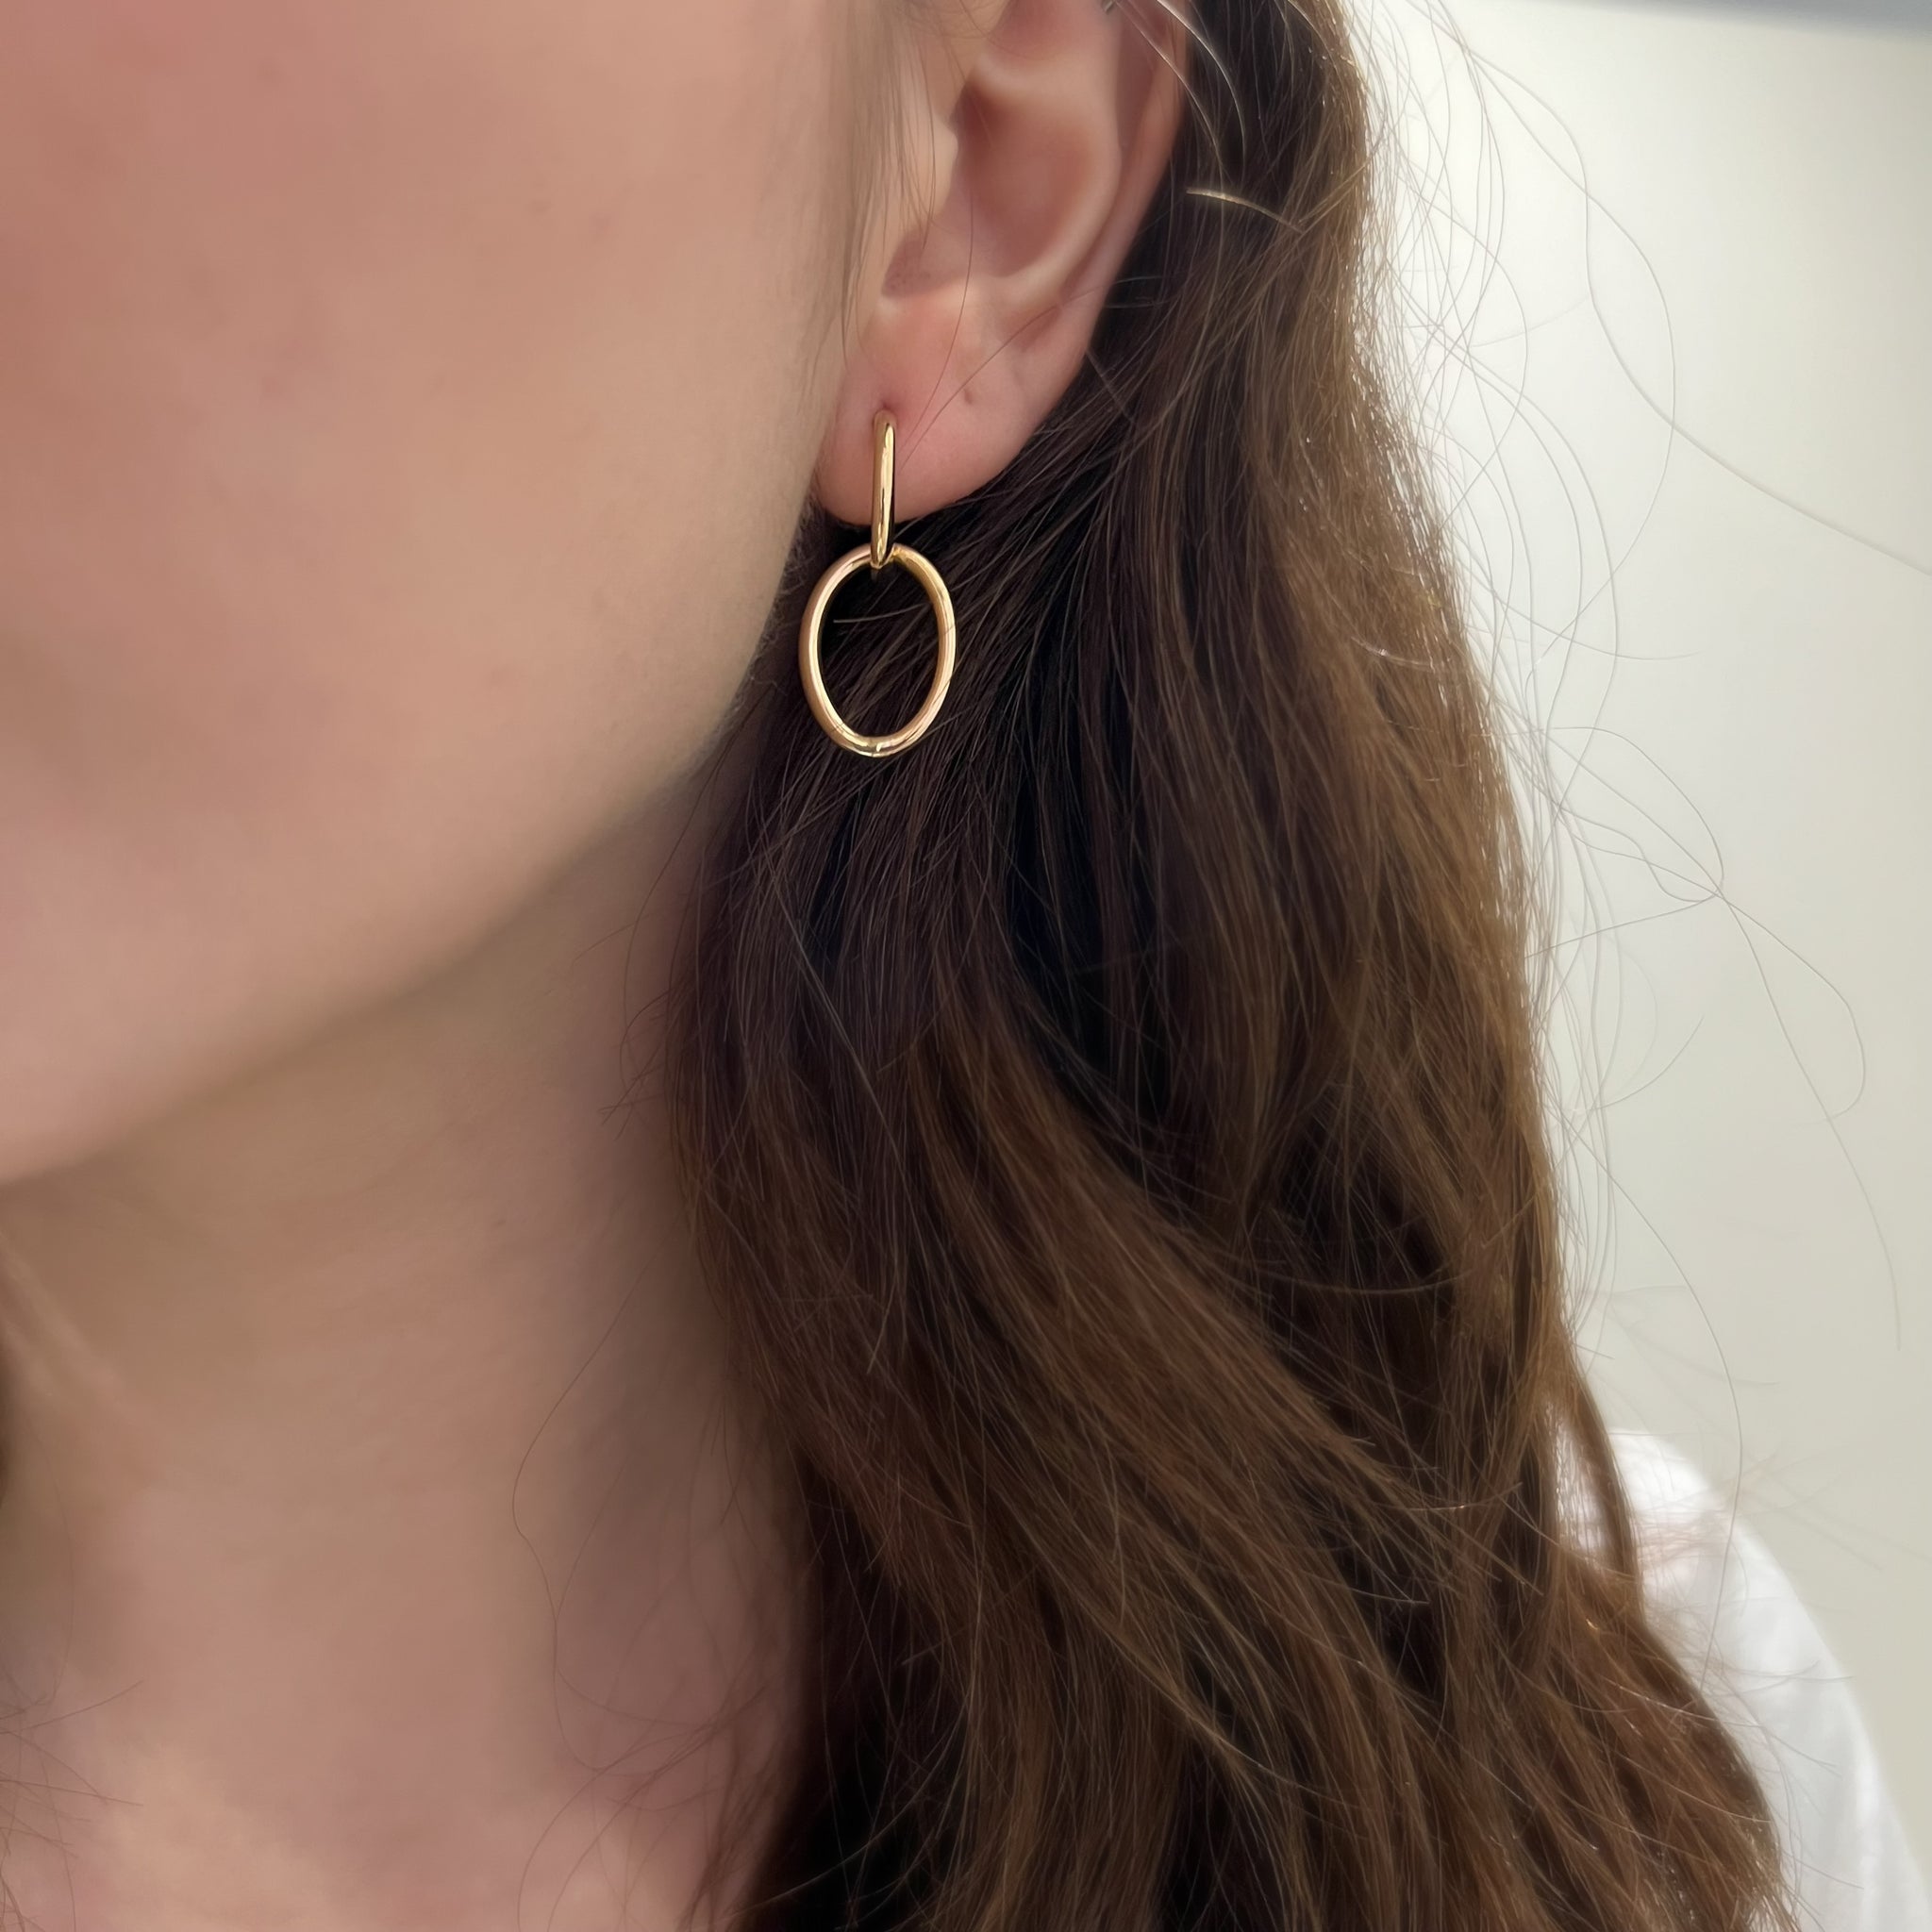 9ct Yellow Gold Double Hoop Drop Earrings